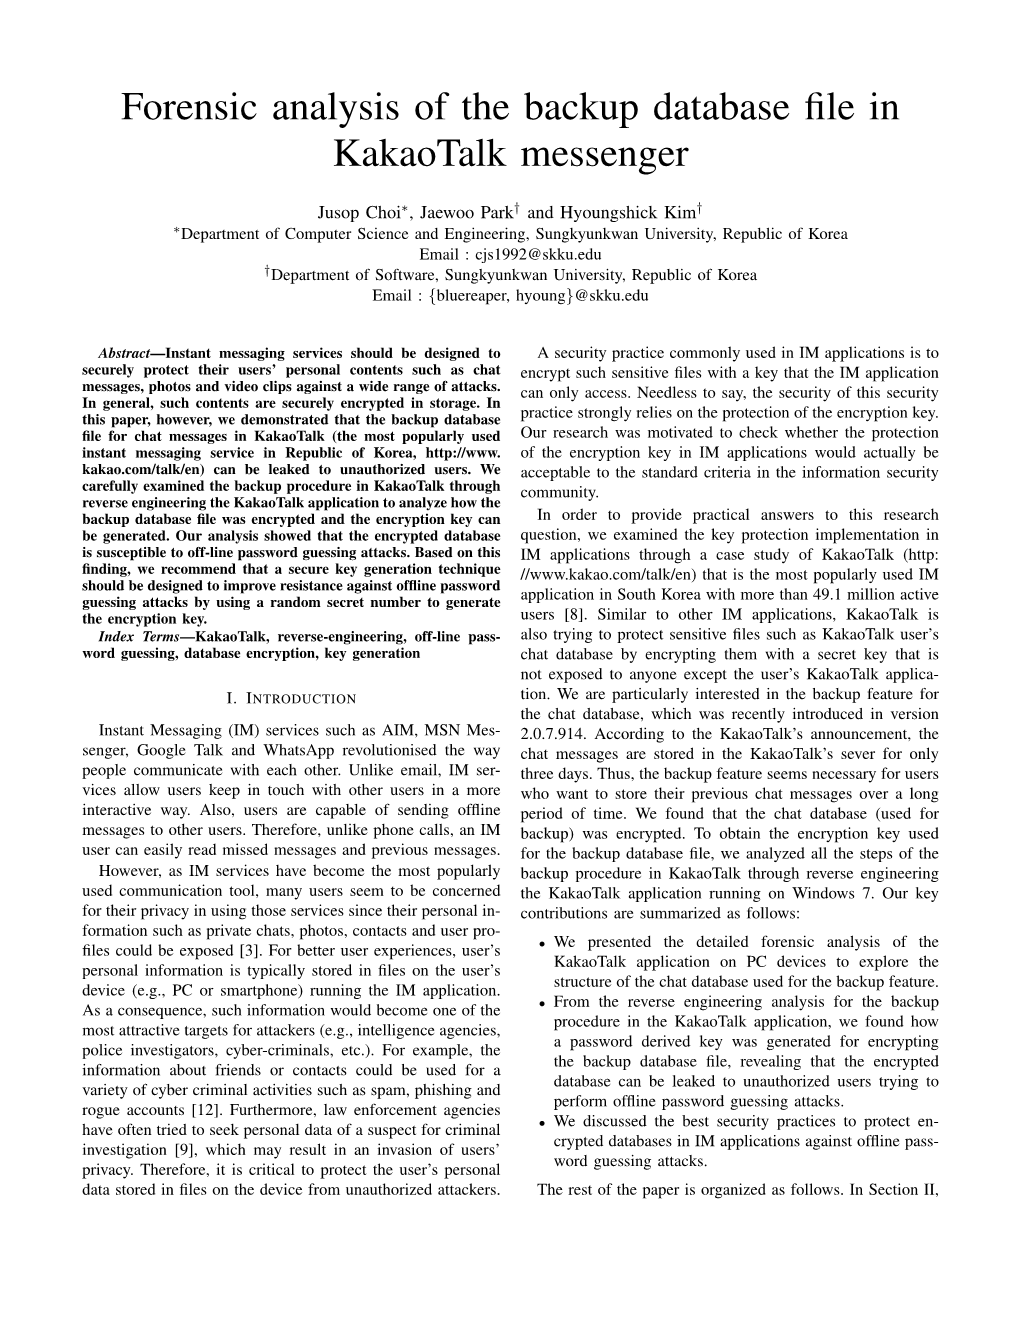 Forensic Analysis of the Backup Database File in Kakaotalk Messenger